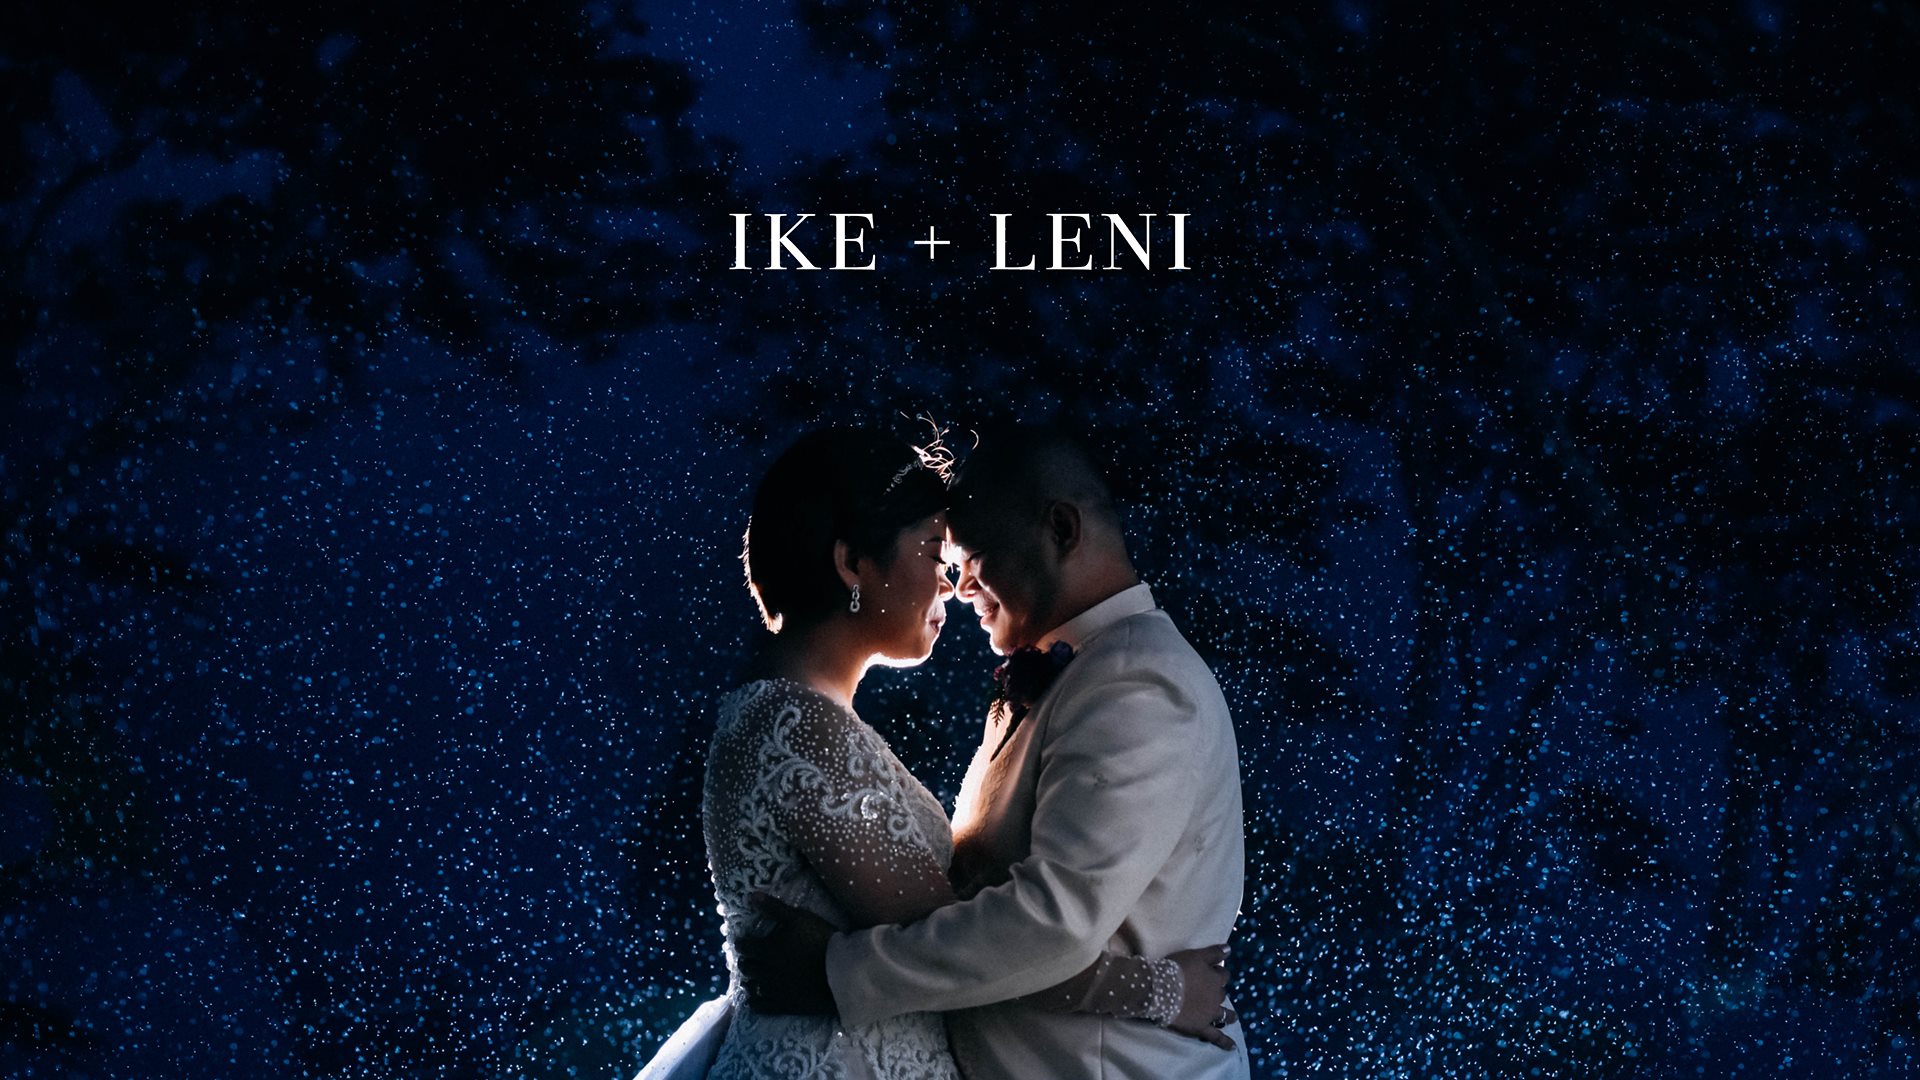 Ike + Leni